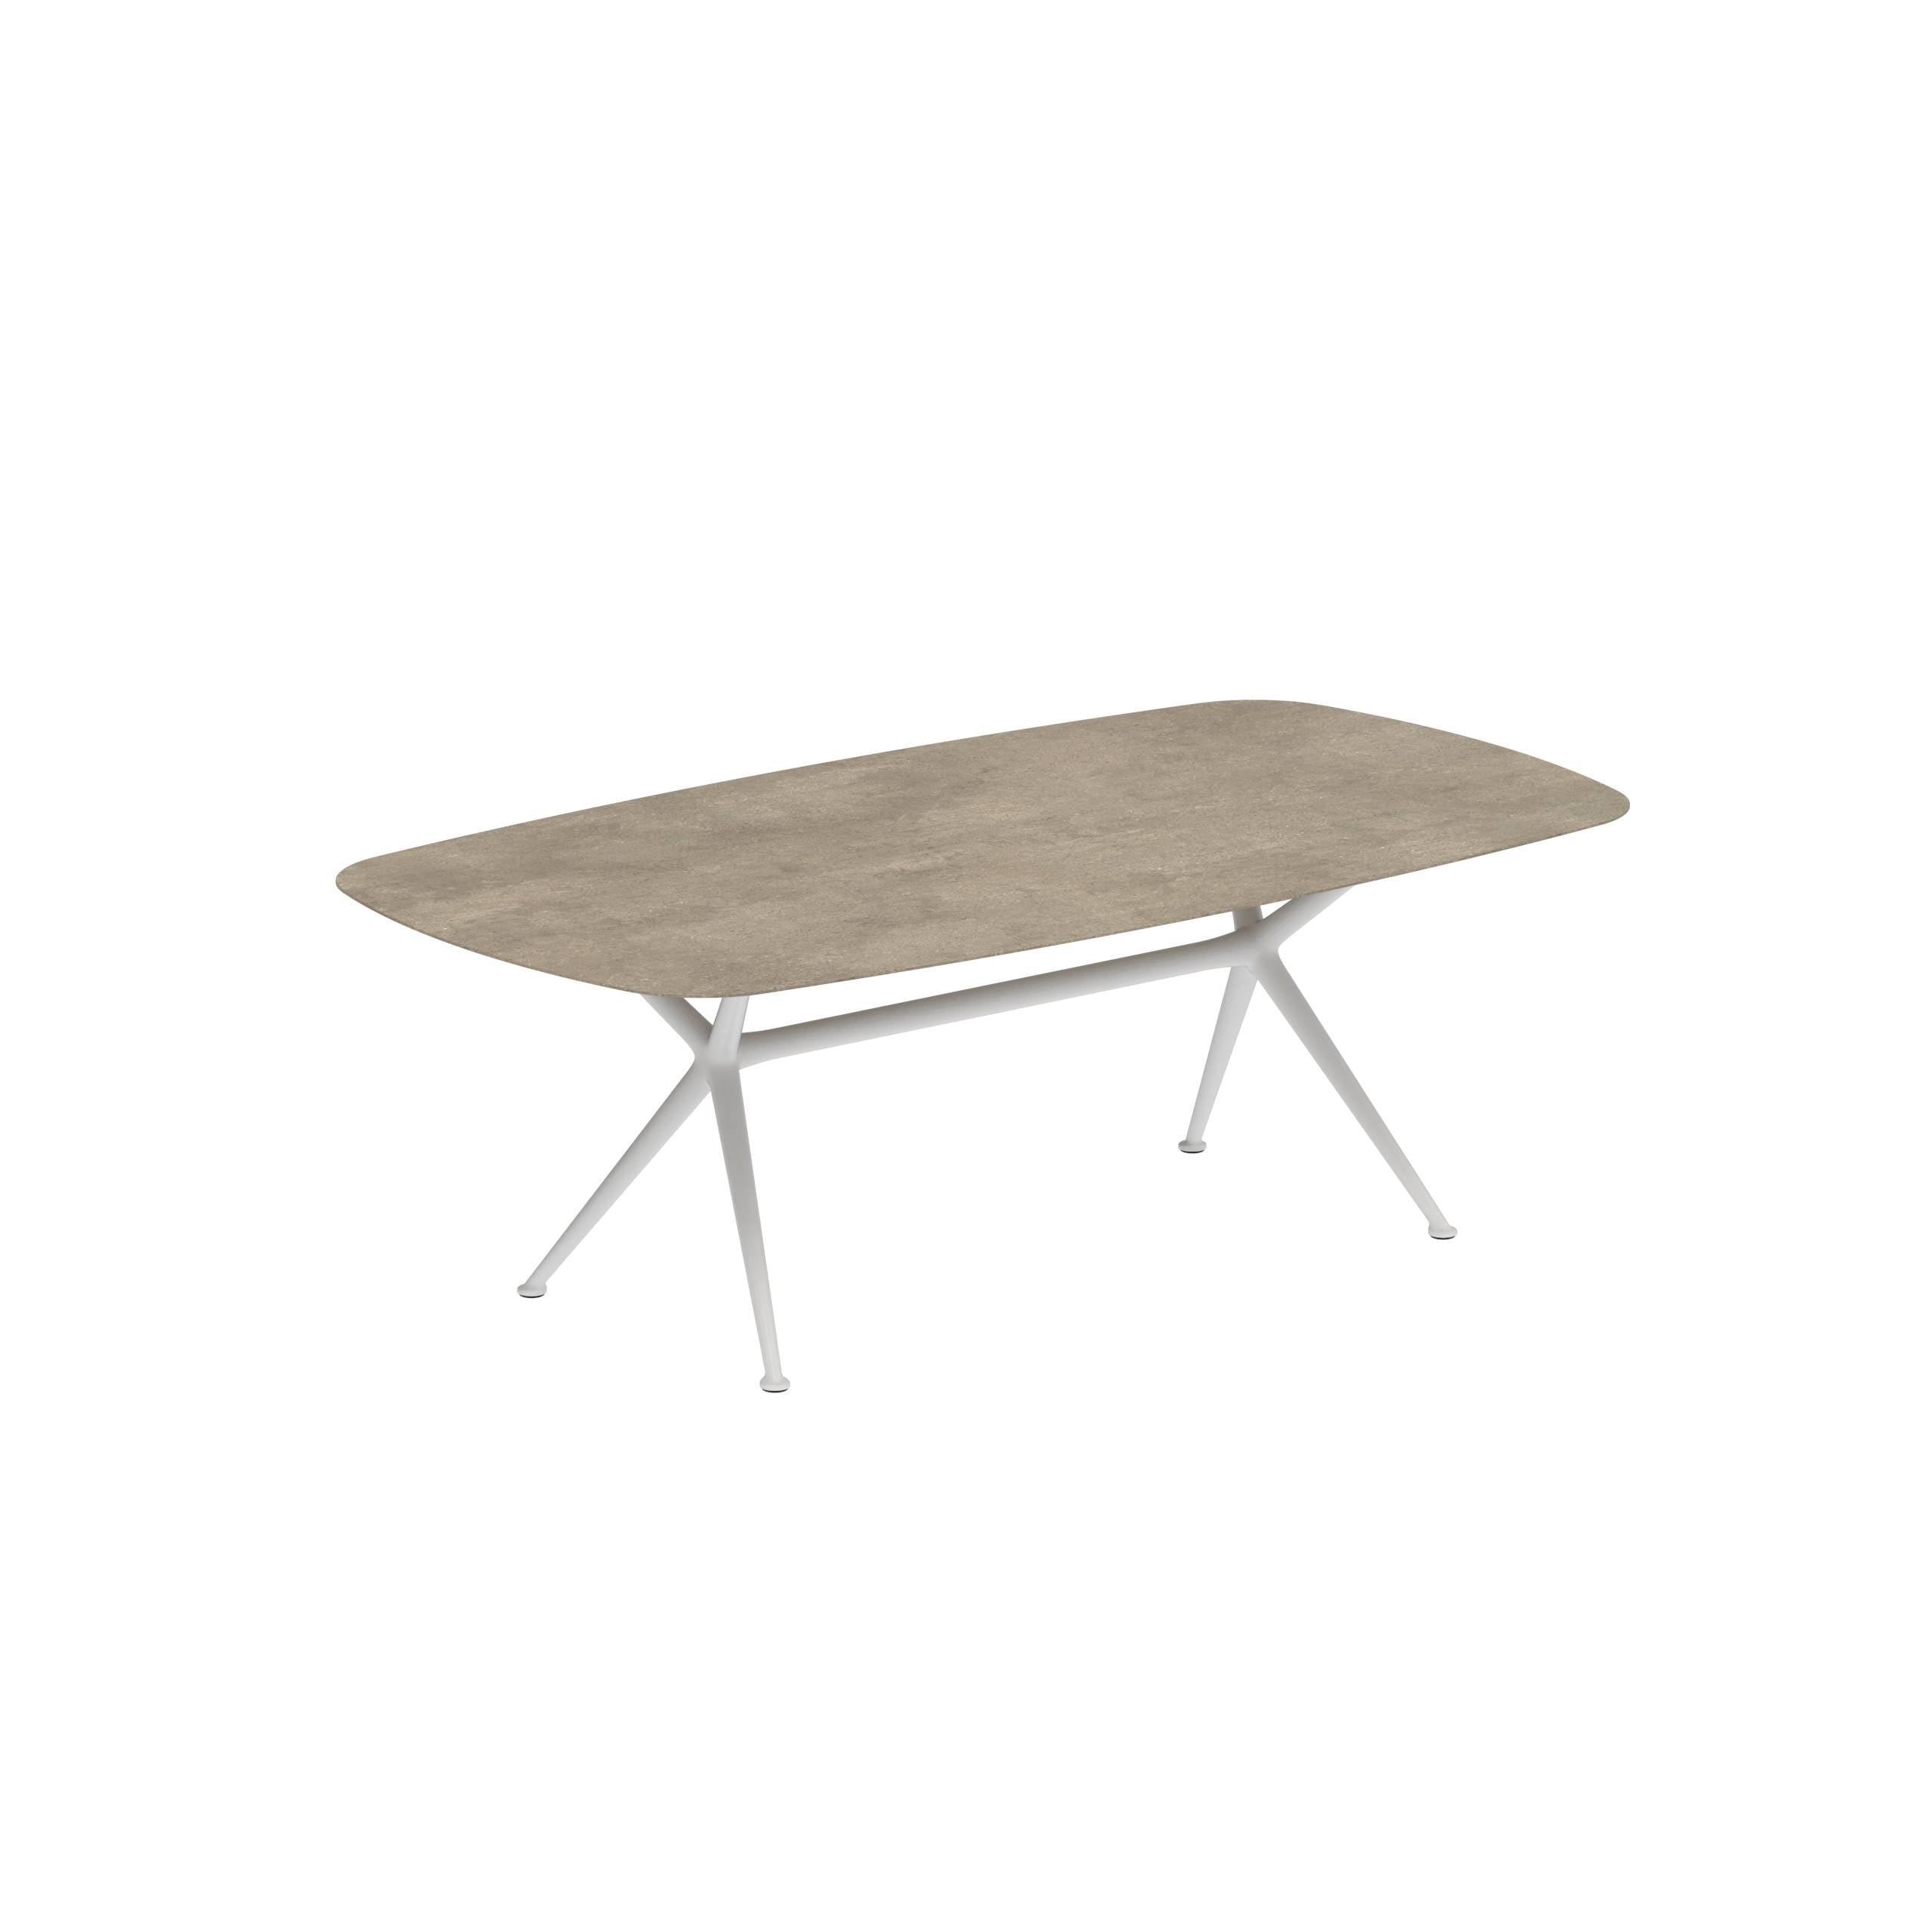 Exes Table 220x120cm Alu Legs White - Table Top Ceramic Terra Sabbia